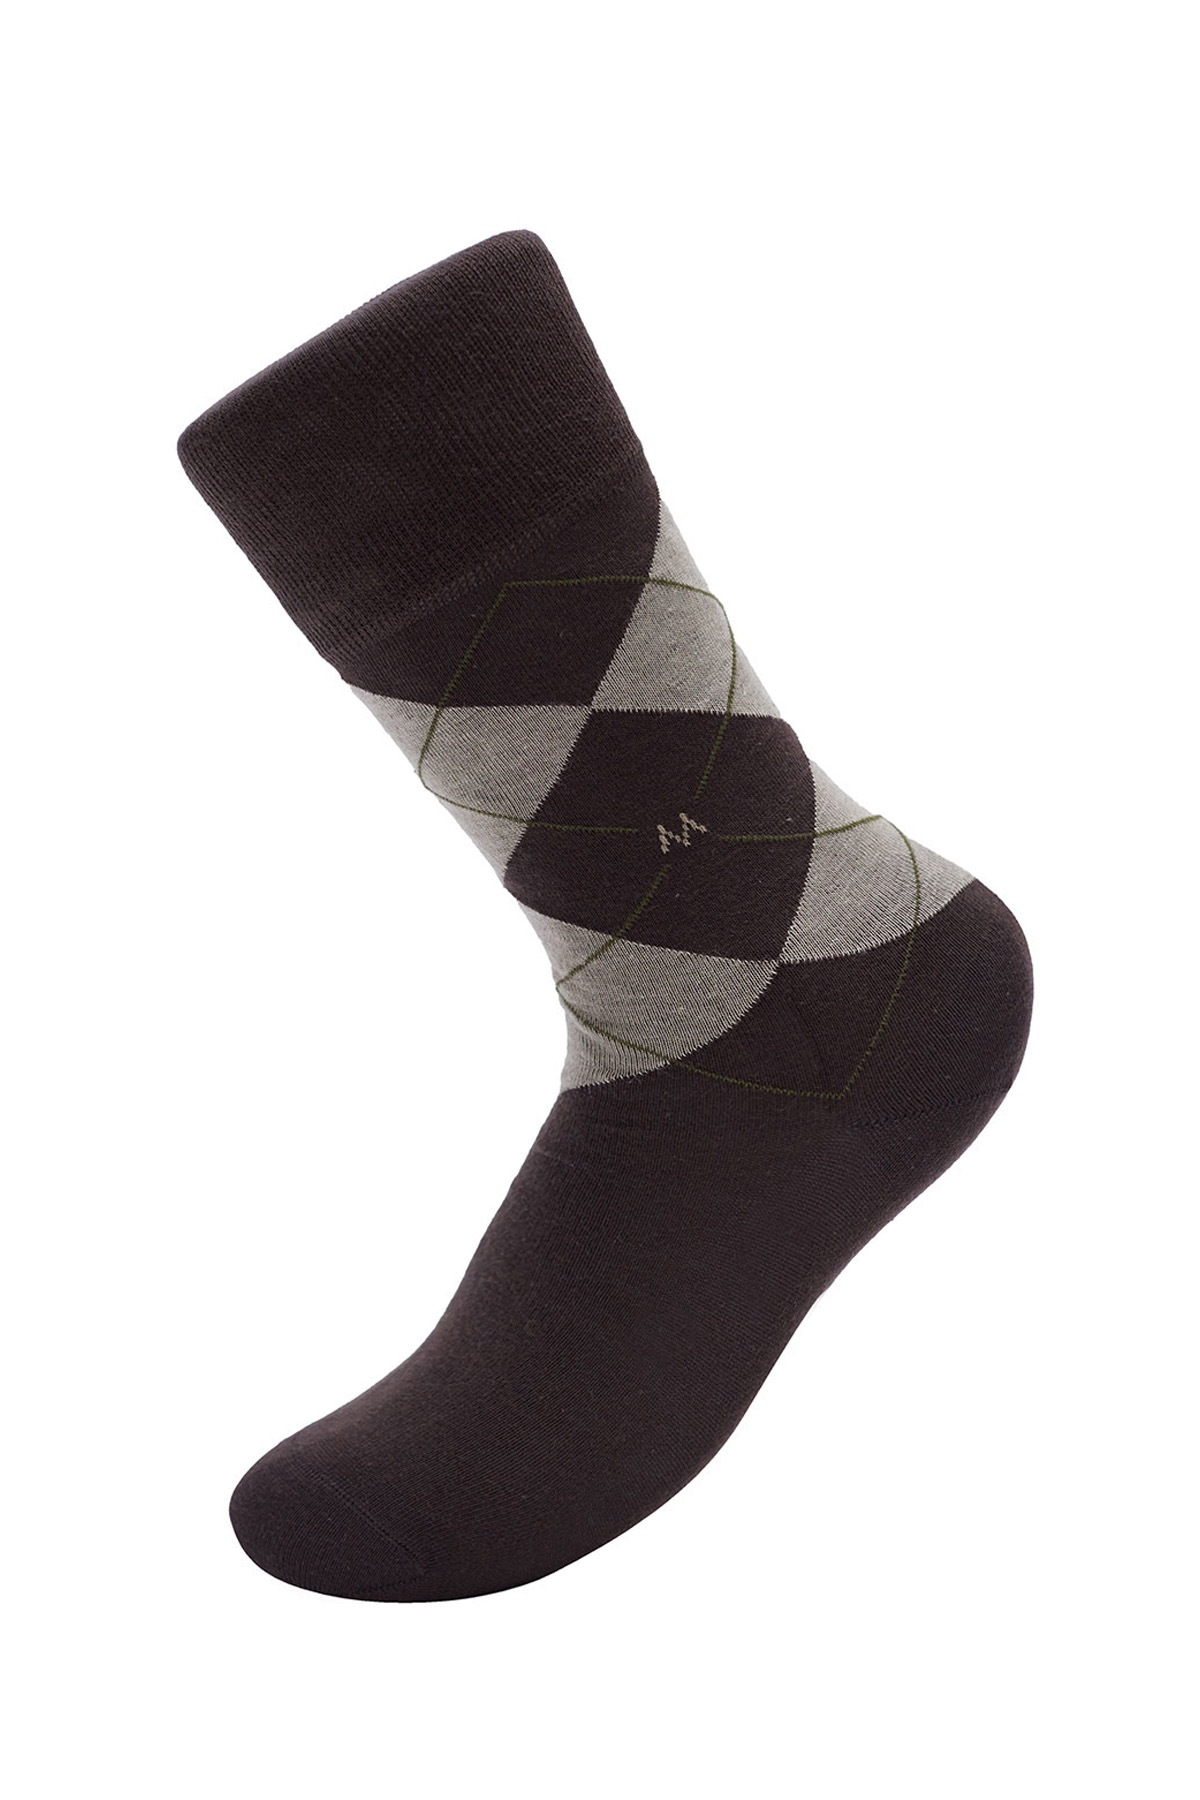 Baklava Desenli Kahverengi Pamuk İkili Çorap Seti